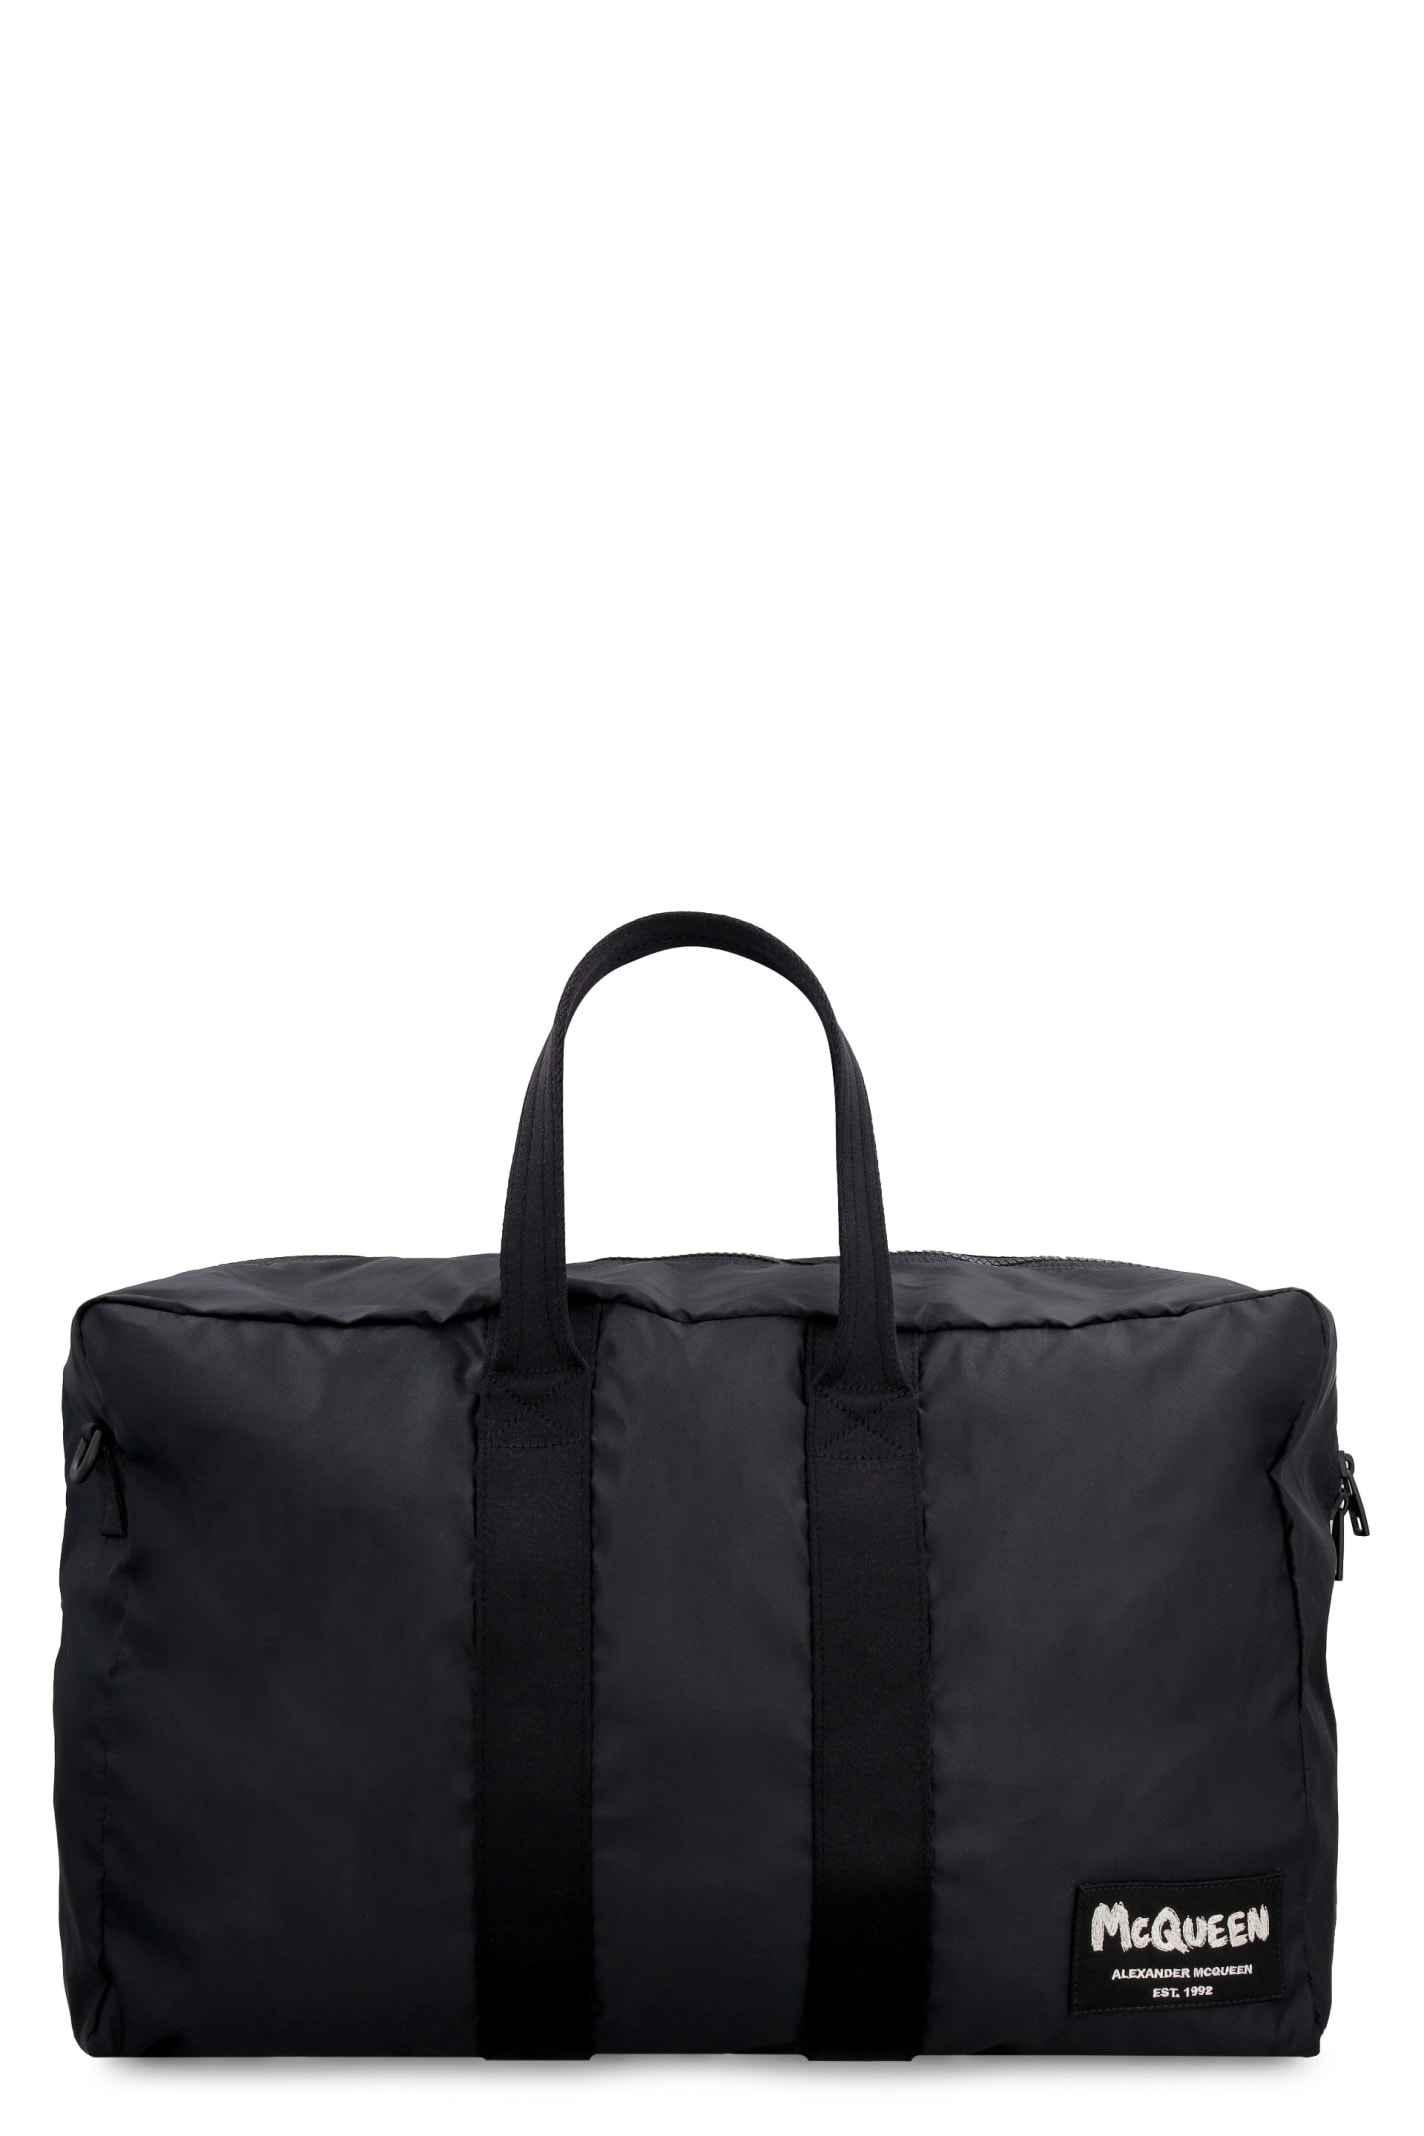 Alexander McQueen Nylon Duffle Bag